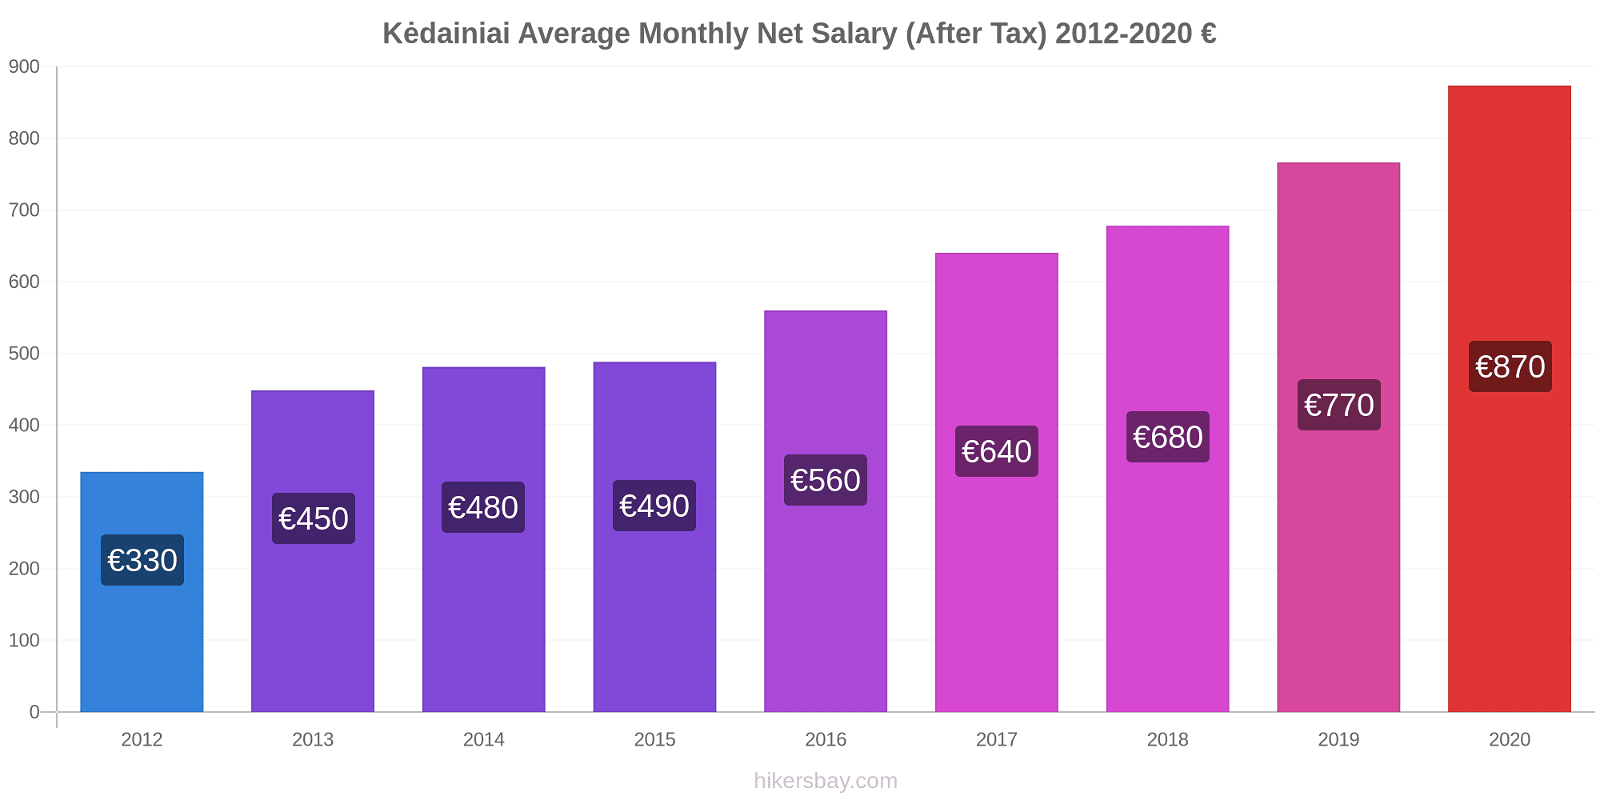 Kėdainiai price changes Average Monthly Net Salary (After Tax) hikersbay.com